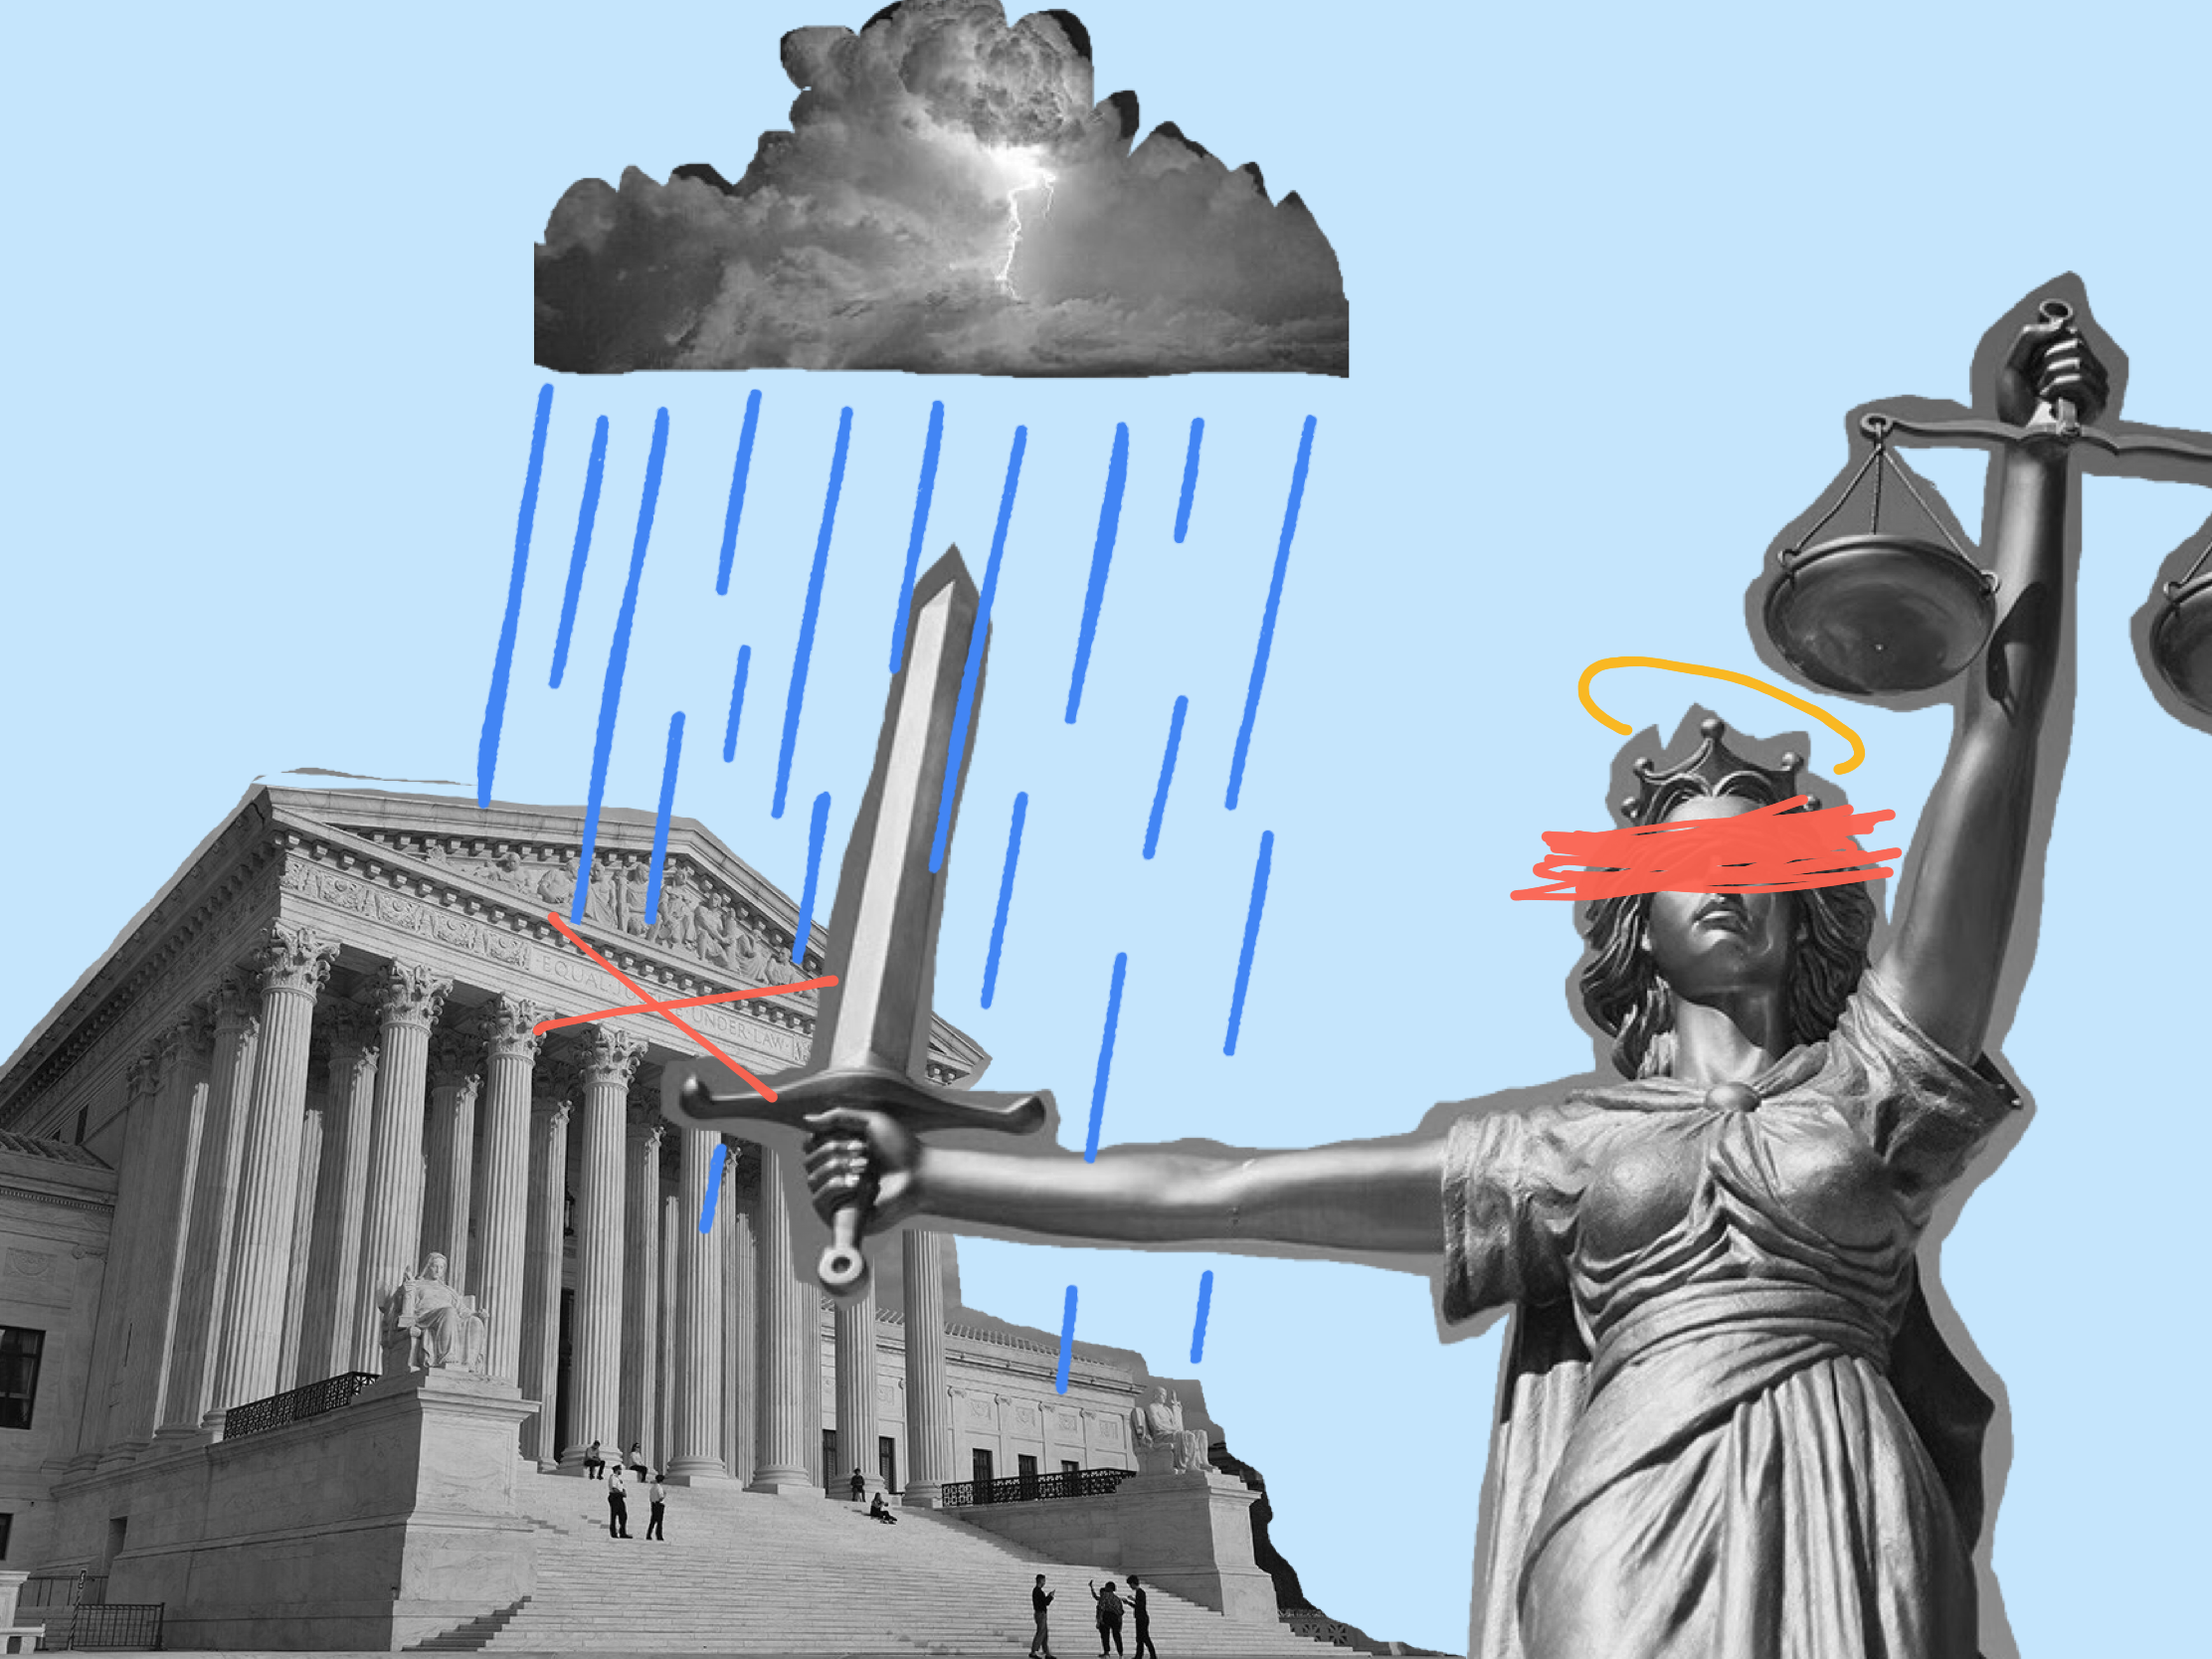 The Supreme Court under a dark storm cloud.